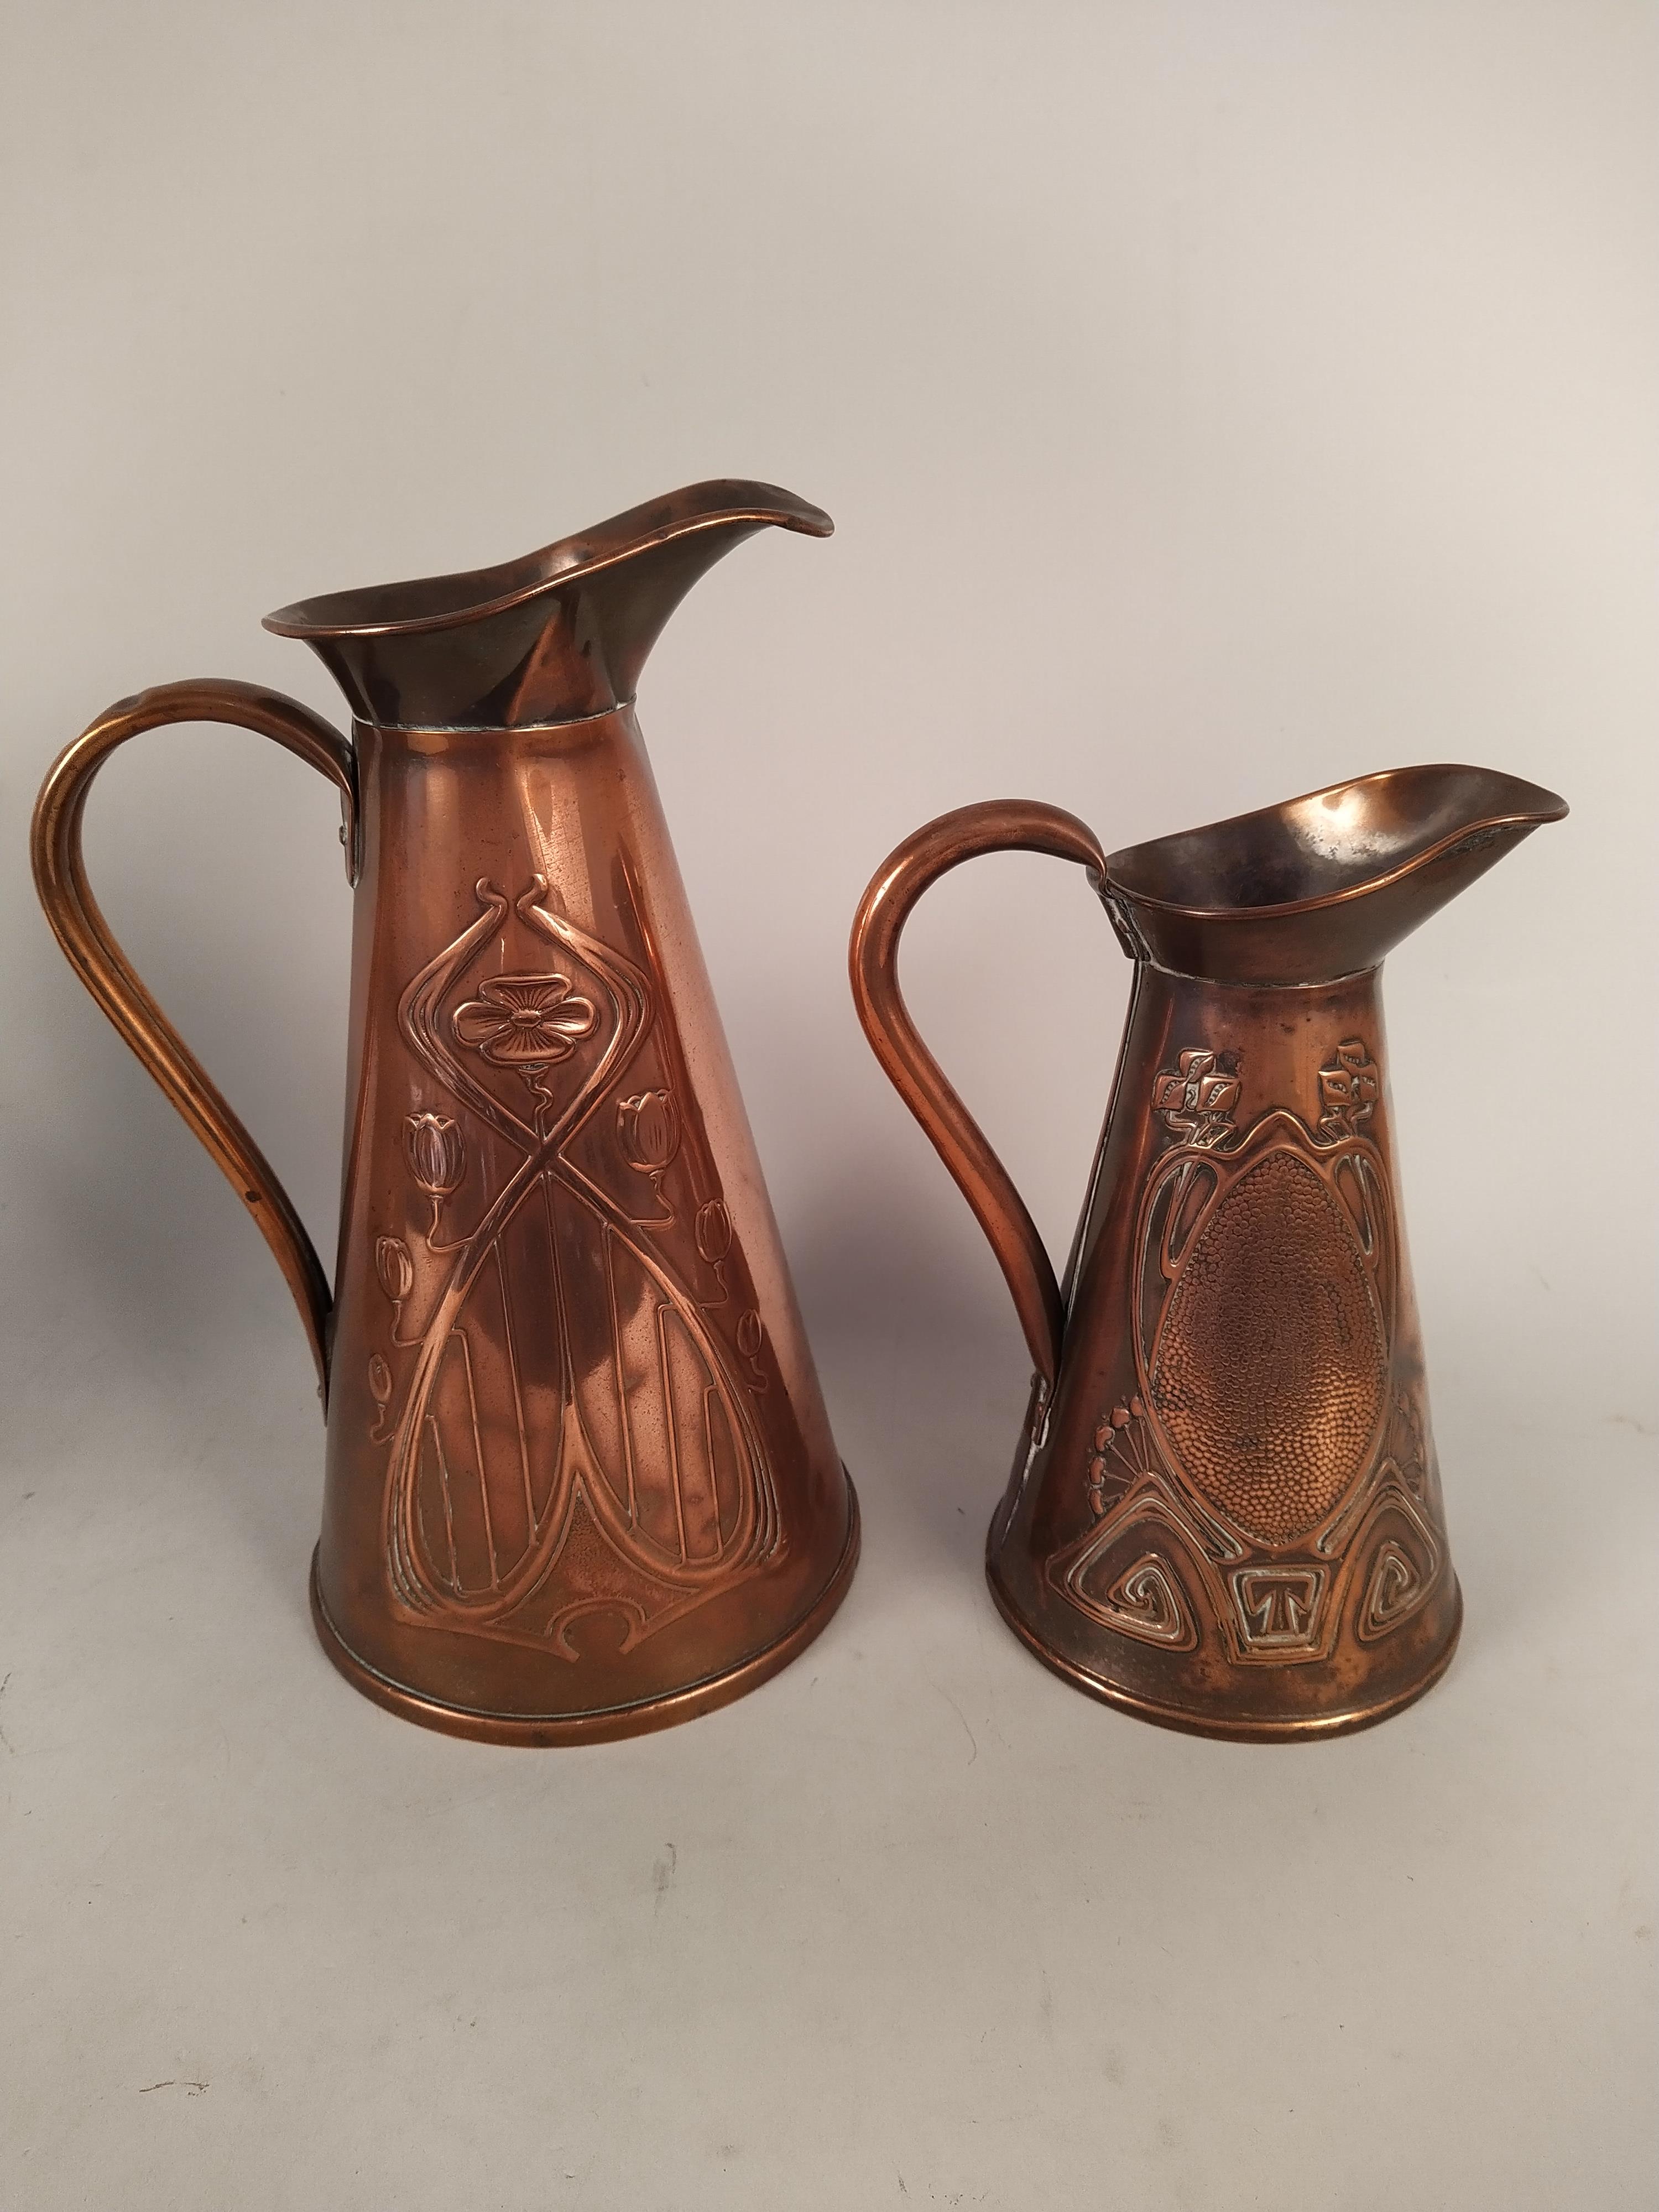 Three decorative Art Nouveau period copper jugs, the tallest marked JS&S (Joseph Sankey & Sons), - Image 2 of 3